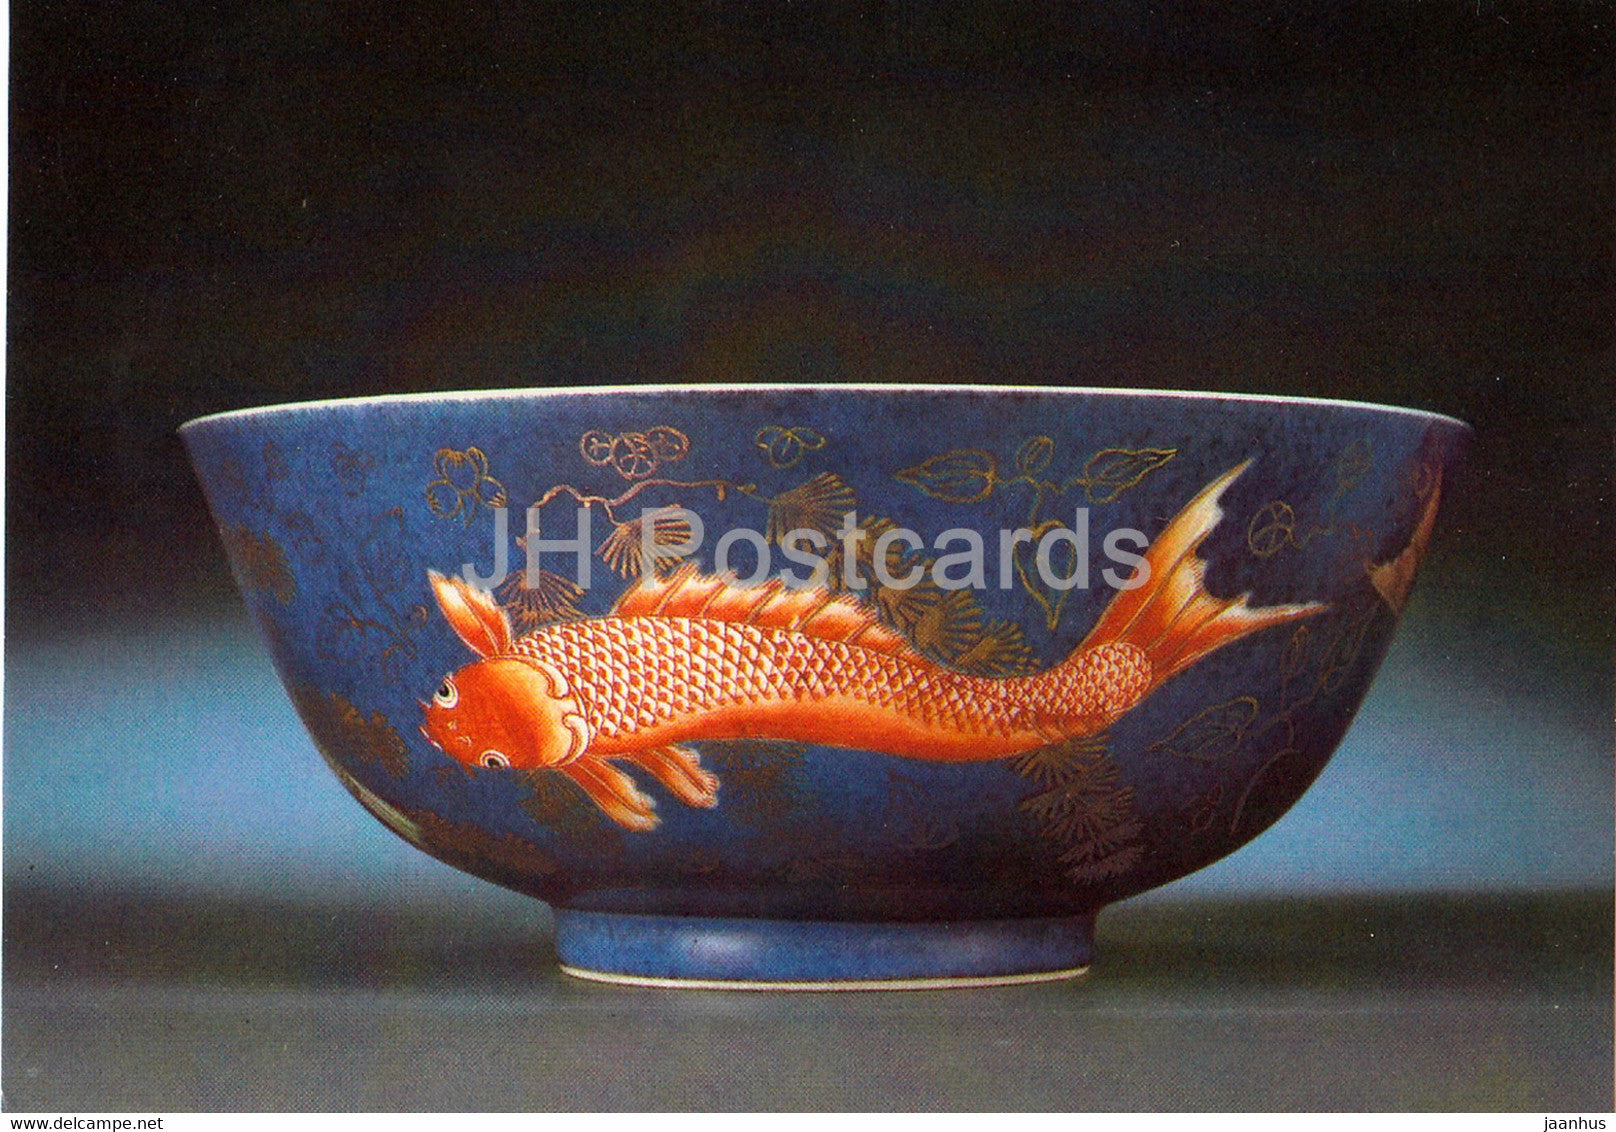 Kumme mit unterglasurblauem Fond - fish - porcelain - Porzelansammlung - Zwinger - DDR Germany - unused - JH Postcards